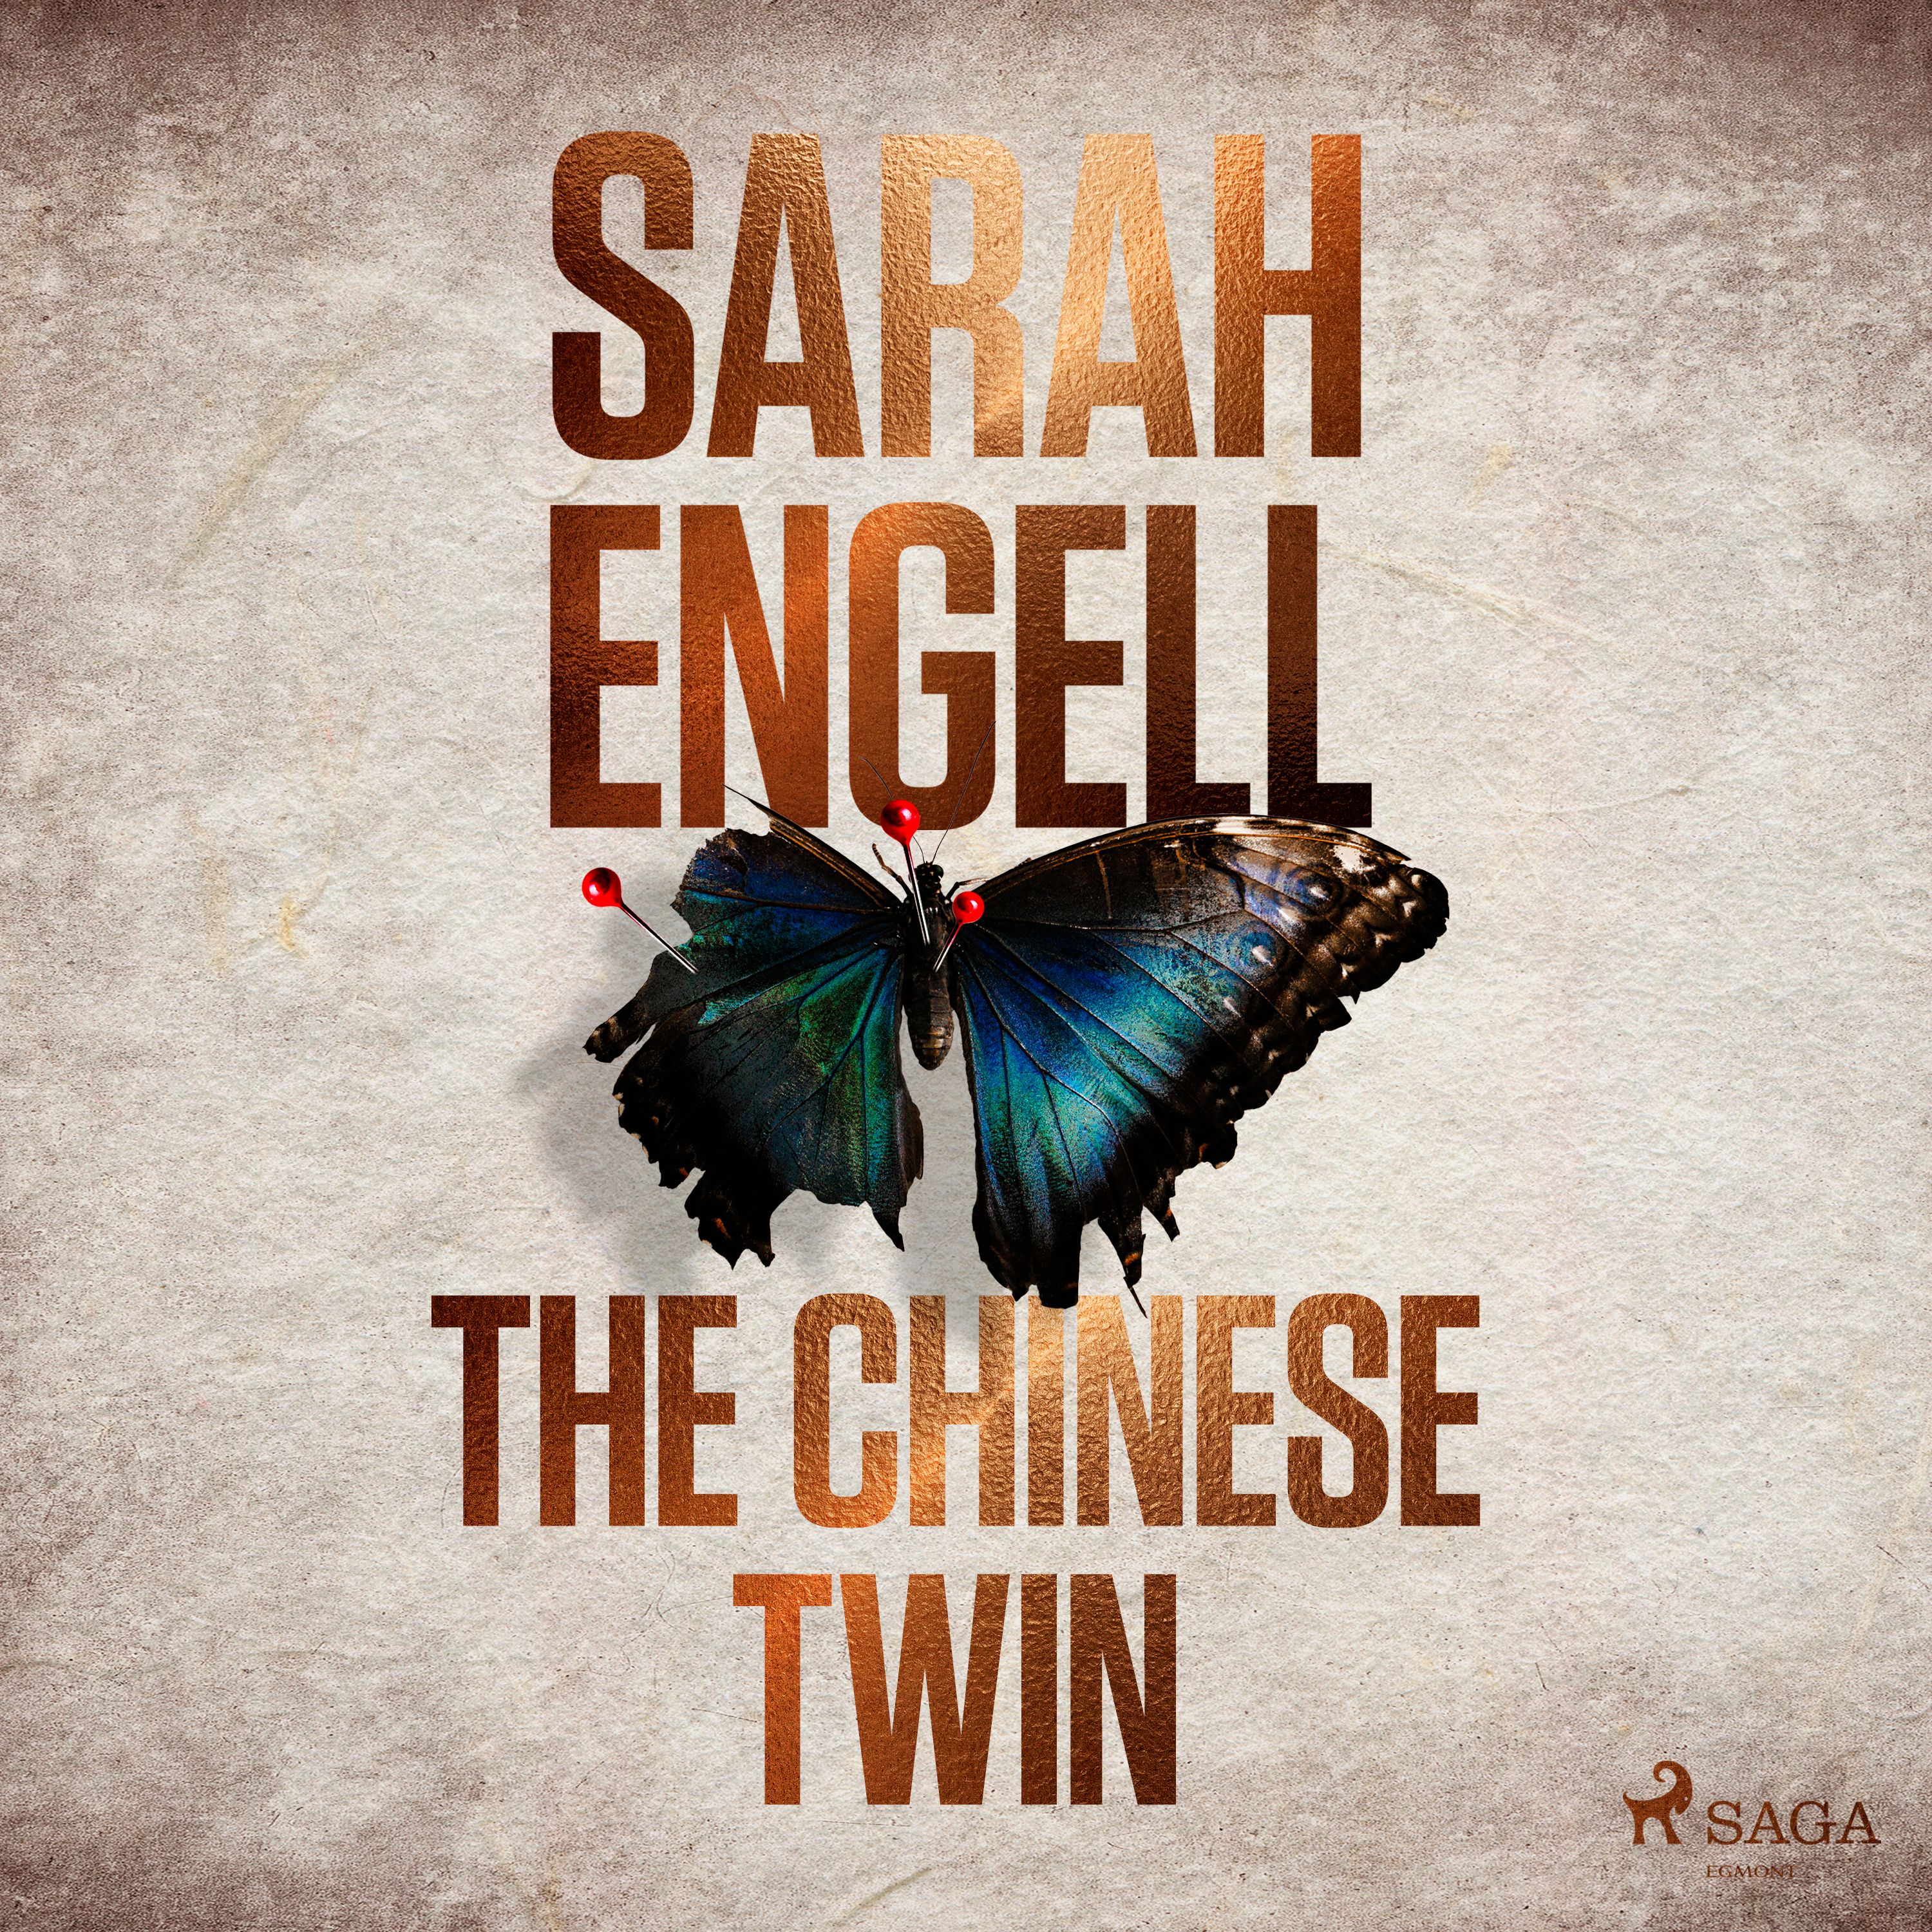 The Chinese Twin, ljudbok av Sarah Engell